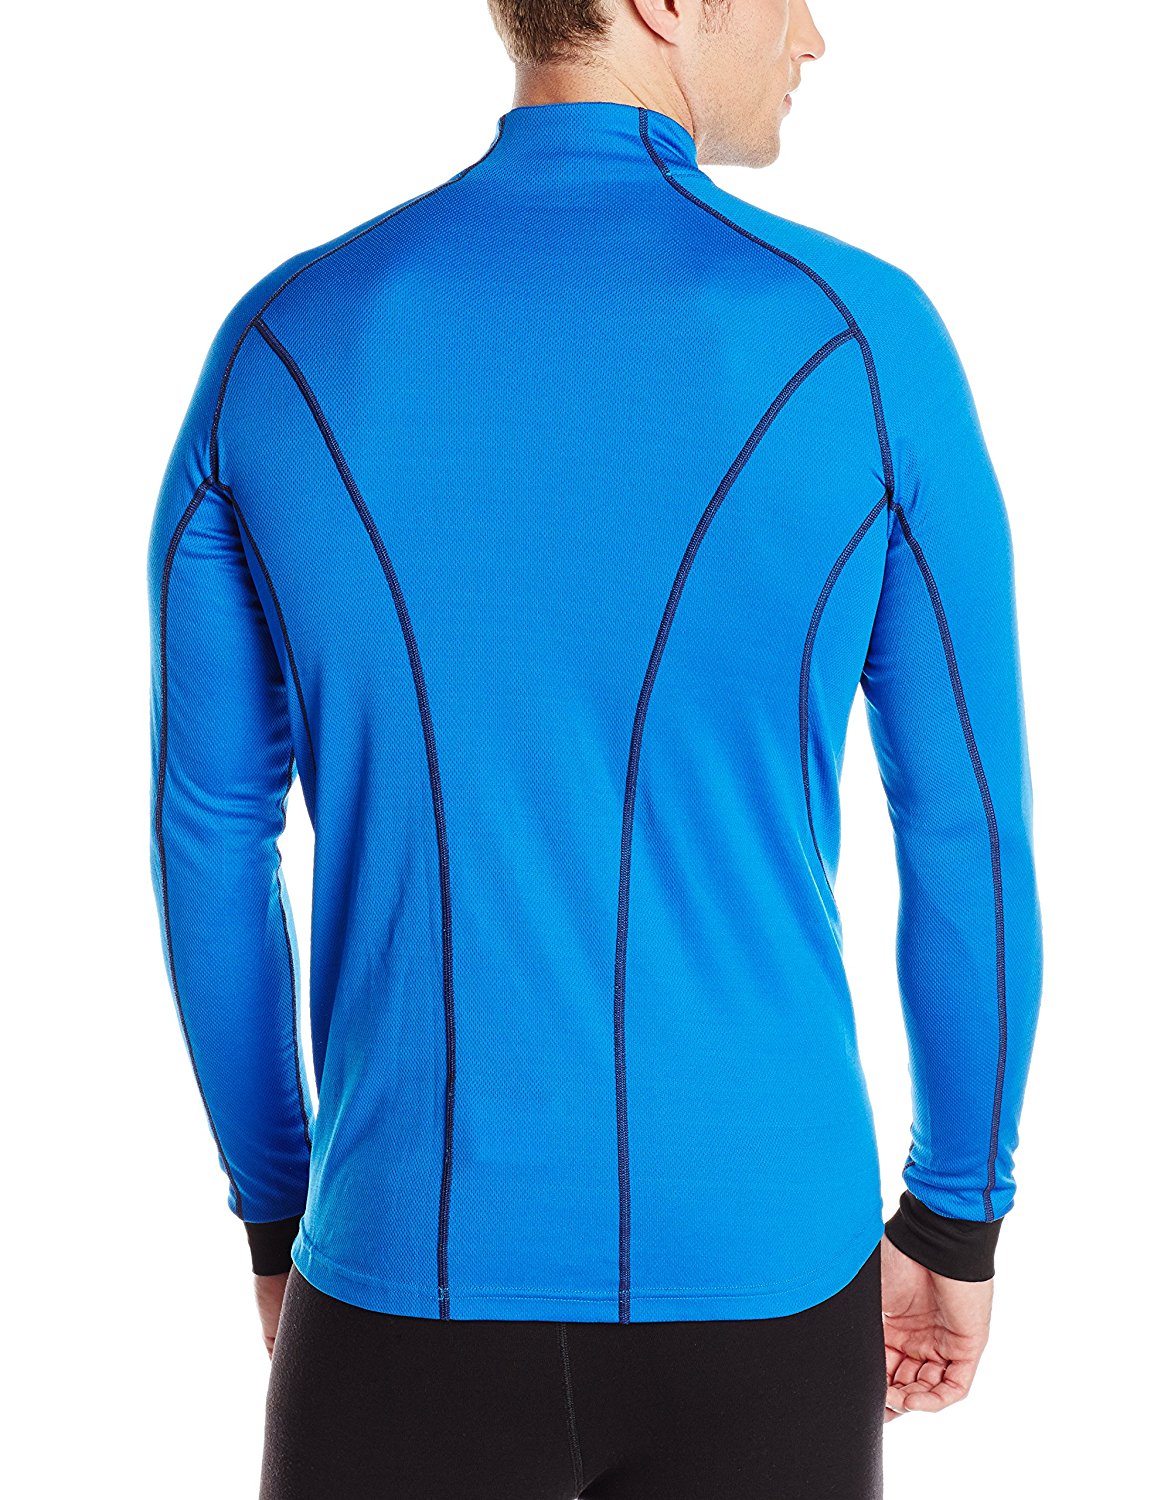 Hansen Men's Dry 1/2 Zip Base Layer Shirt, Cobalt Blue Fanletic